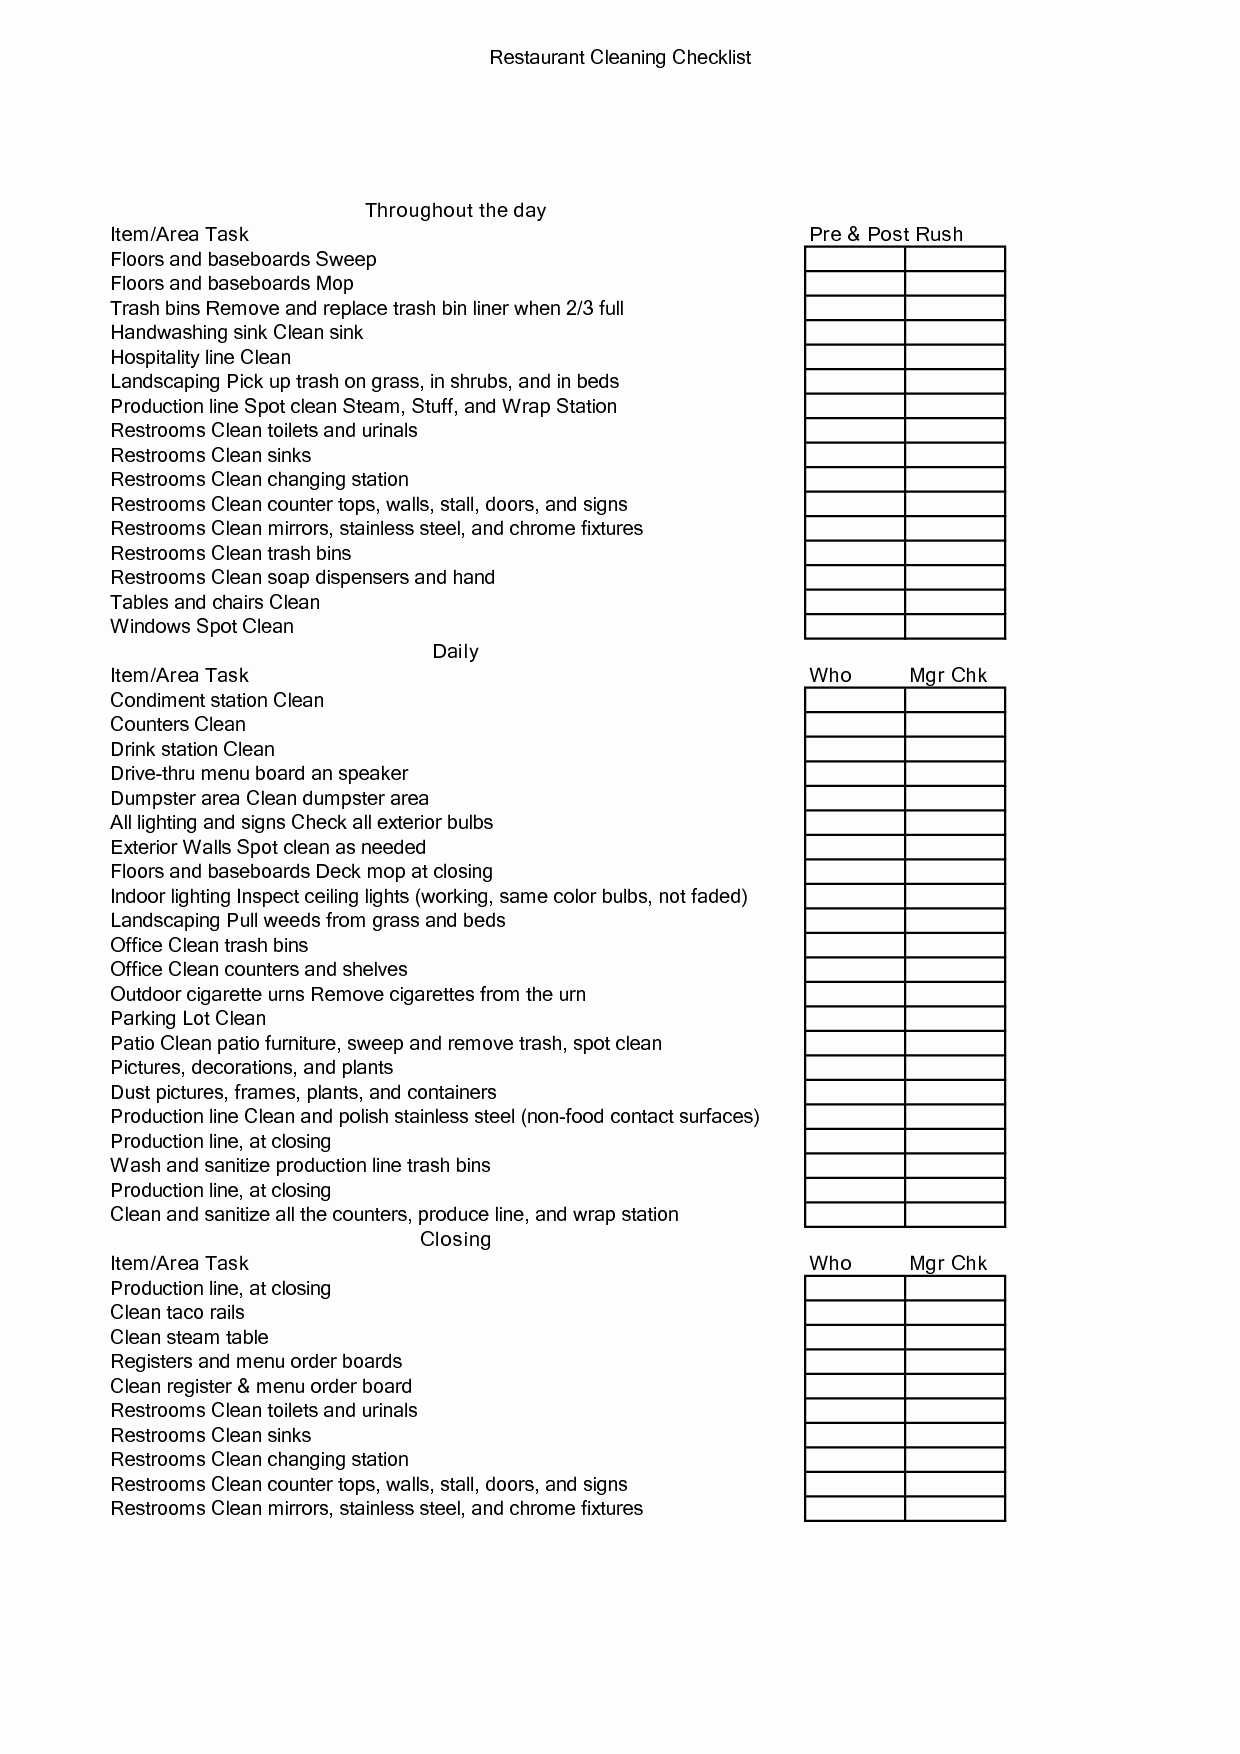 Restaurant Cleaning Checklist Template Beautiful Cleaning Schedule Template for Restaurant